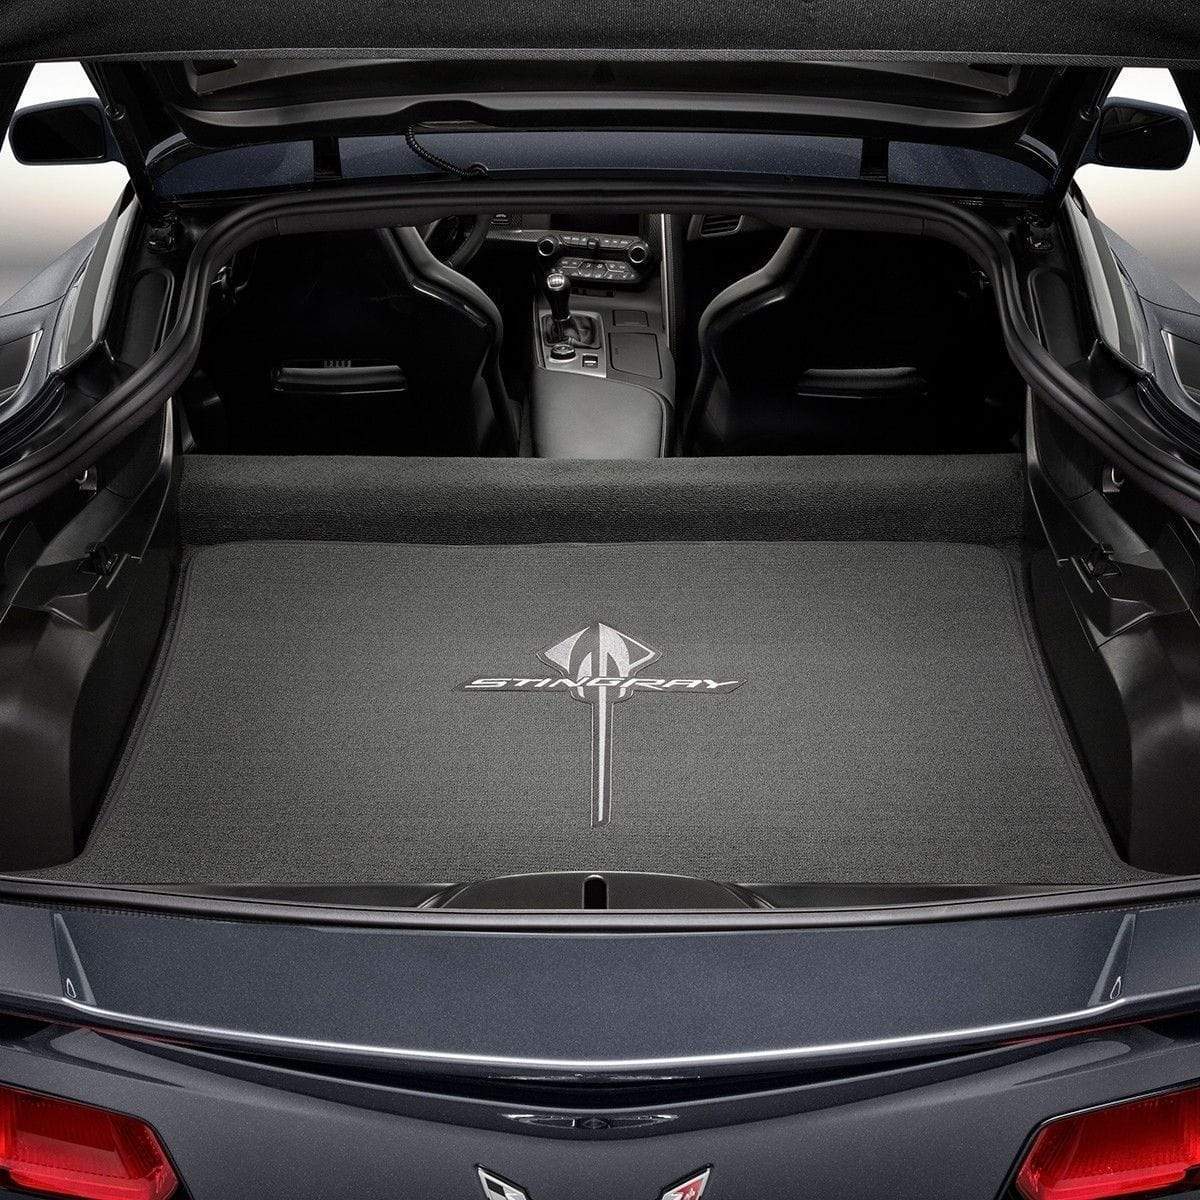 Jet Black Stingray Logo Floor Mats for C7 Corvette (SKU: 45-4-229) - Genuine Chevrolet Accessory to Protect Interior